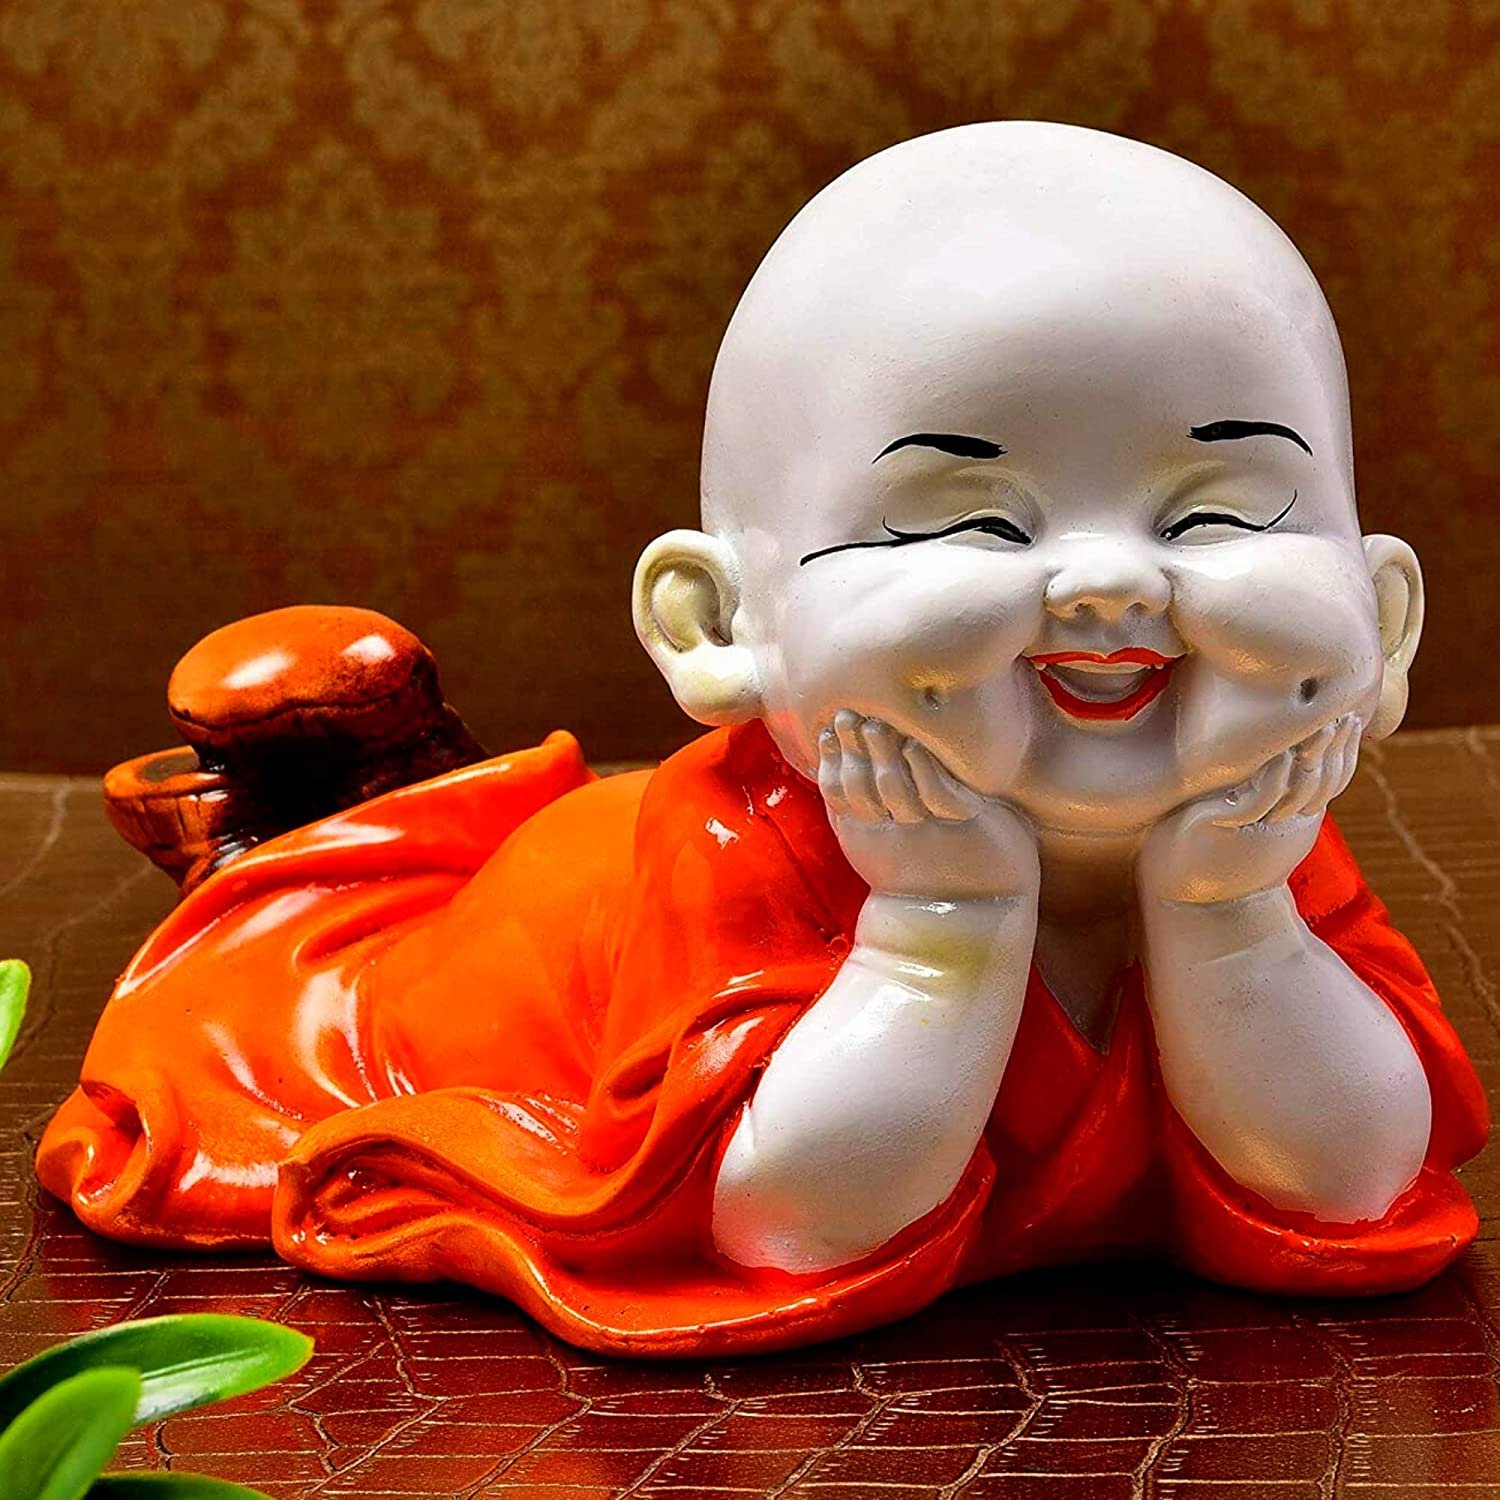 laughing buddha smiling little buddha ceramic| Alibaba.com